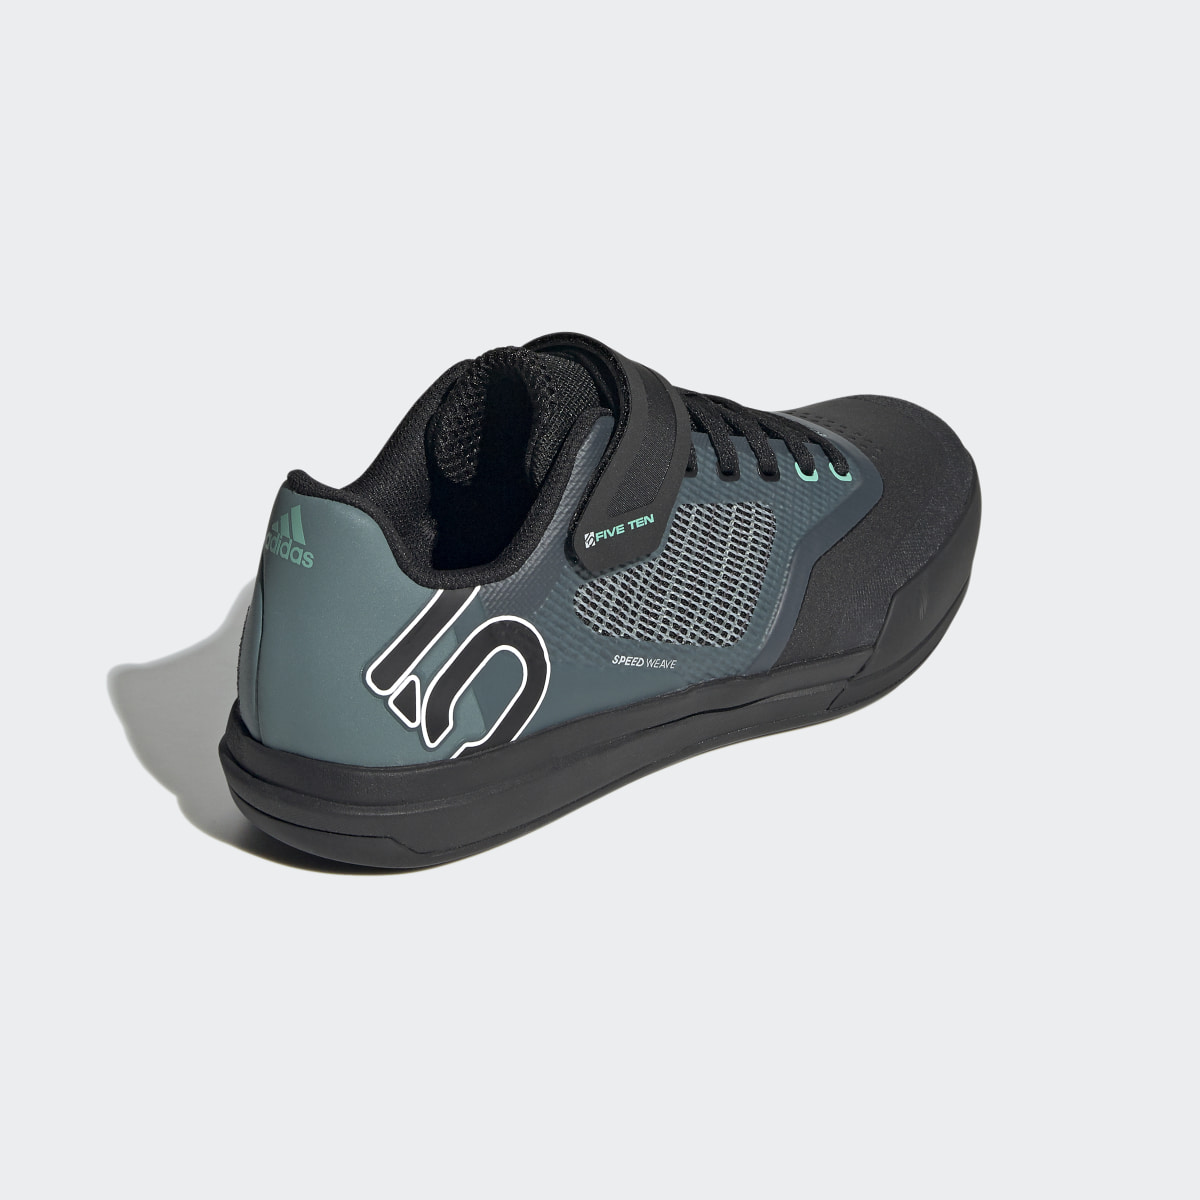 Adidas Sapatos de BTT Hellcat Pro Five Ten. 6